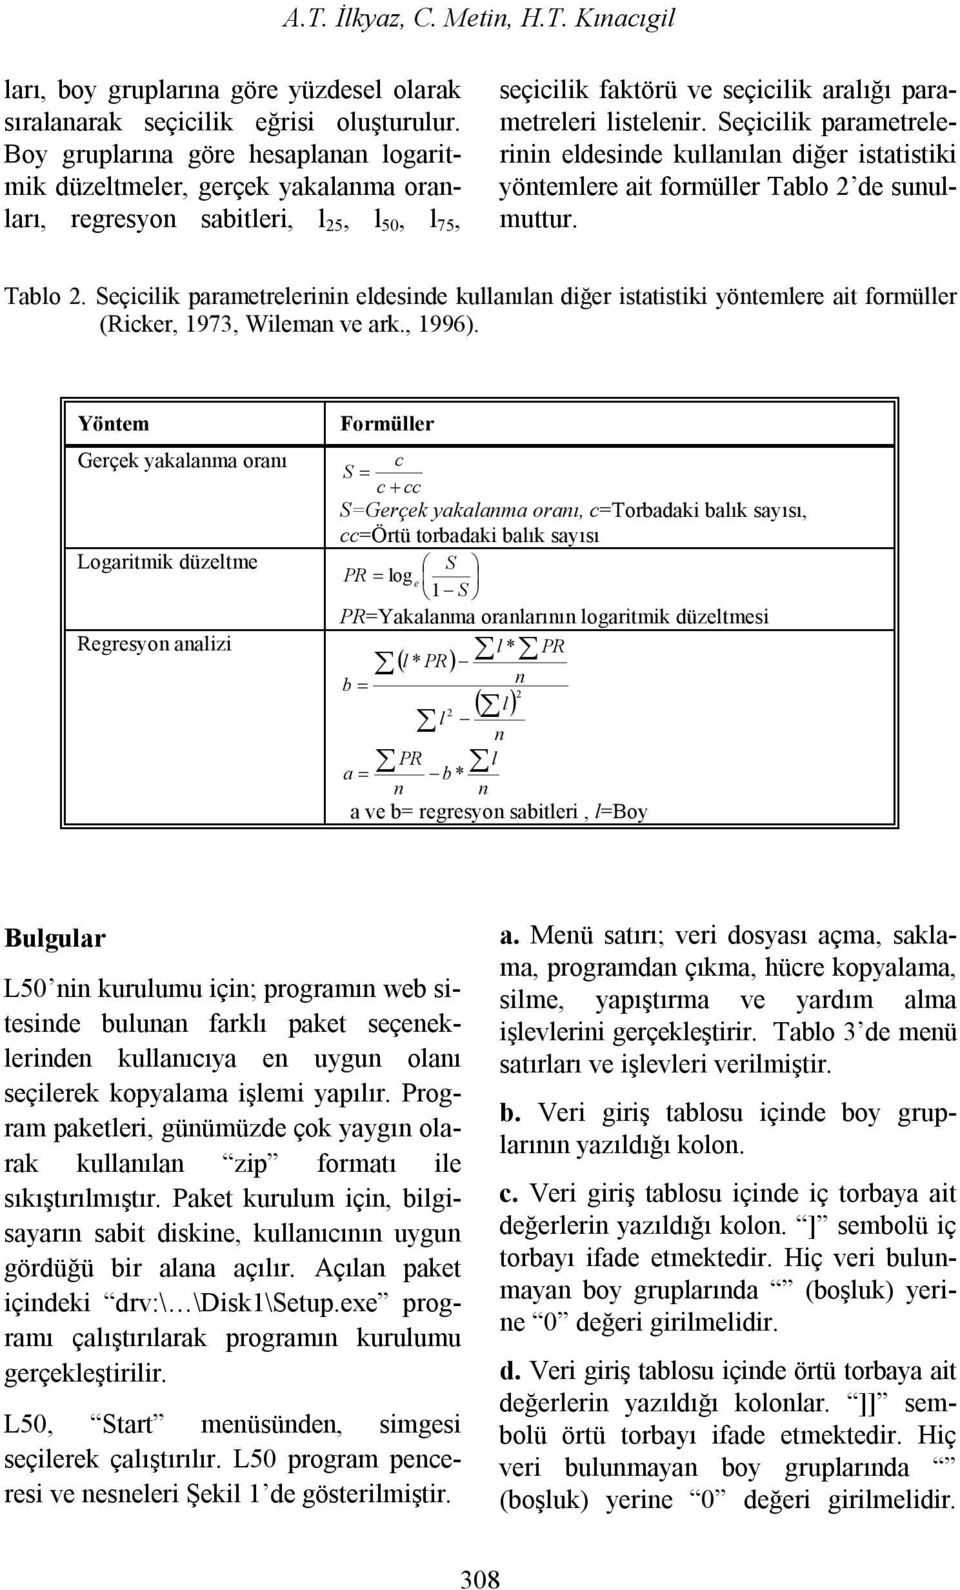 Sçicilik paramtrlrinin ldsind kullanılan diğr istatistiki yöntmlr ait formüllr Talo 2 d sunulmuttur. Talo 2. Sçicilik paramtrlrinin ldsind kullanılan diğr istatistiki yöntmlr ait formüllr (Rickr, 1973, Wilman v ark.